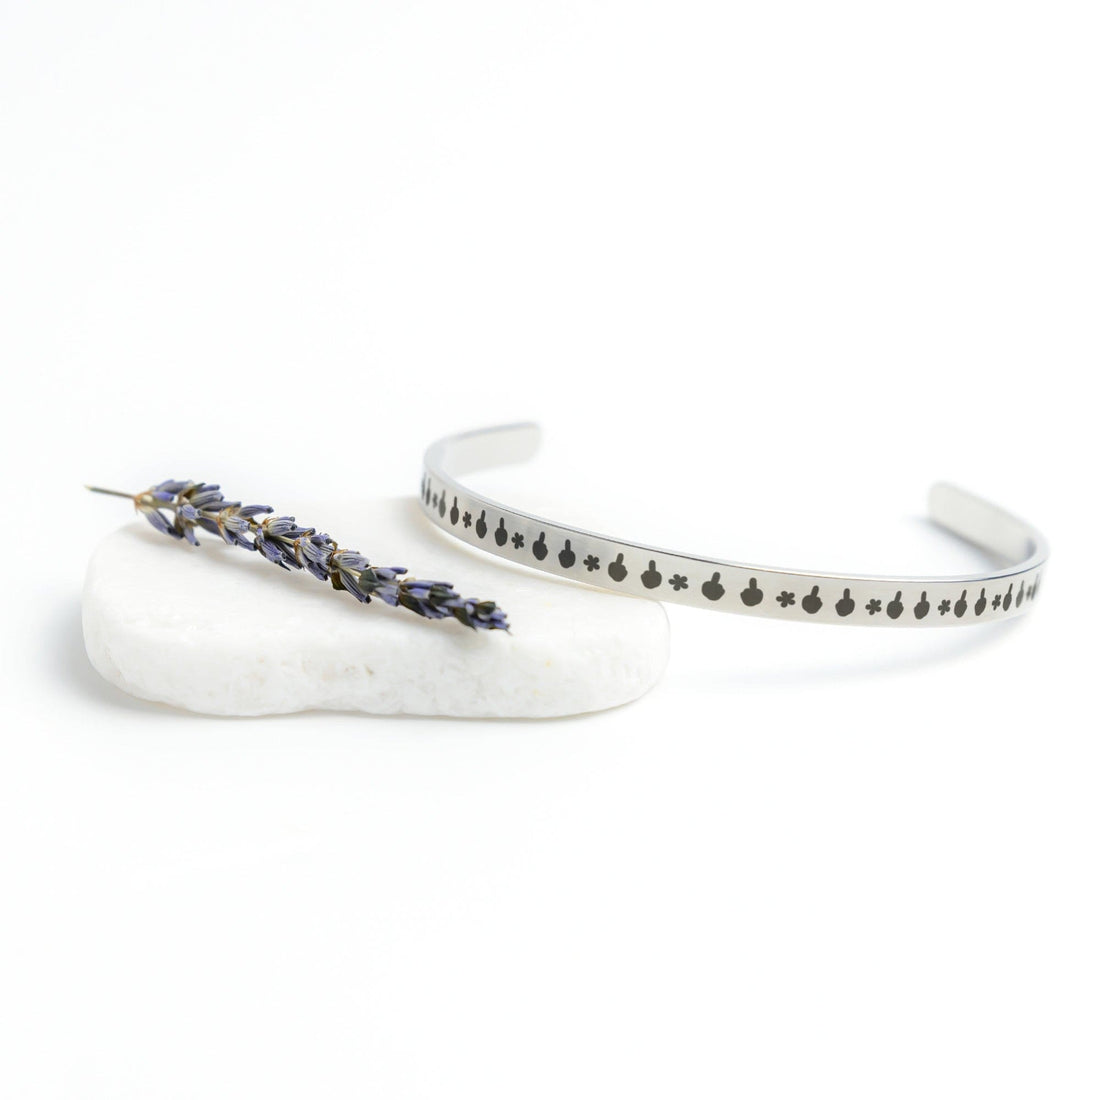 Middle Finger Bracelet, Funny Snarky Gag Gift For Friend, Retro Daisy Cuff Bracelet Jewelry